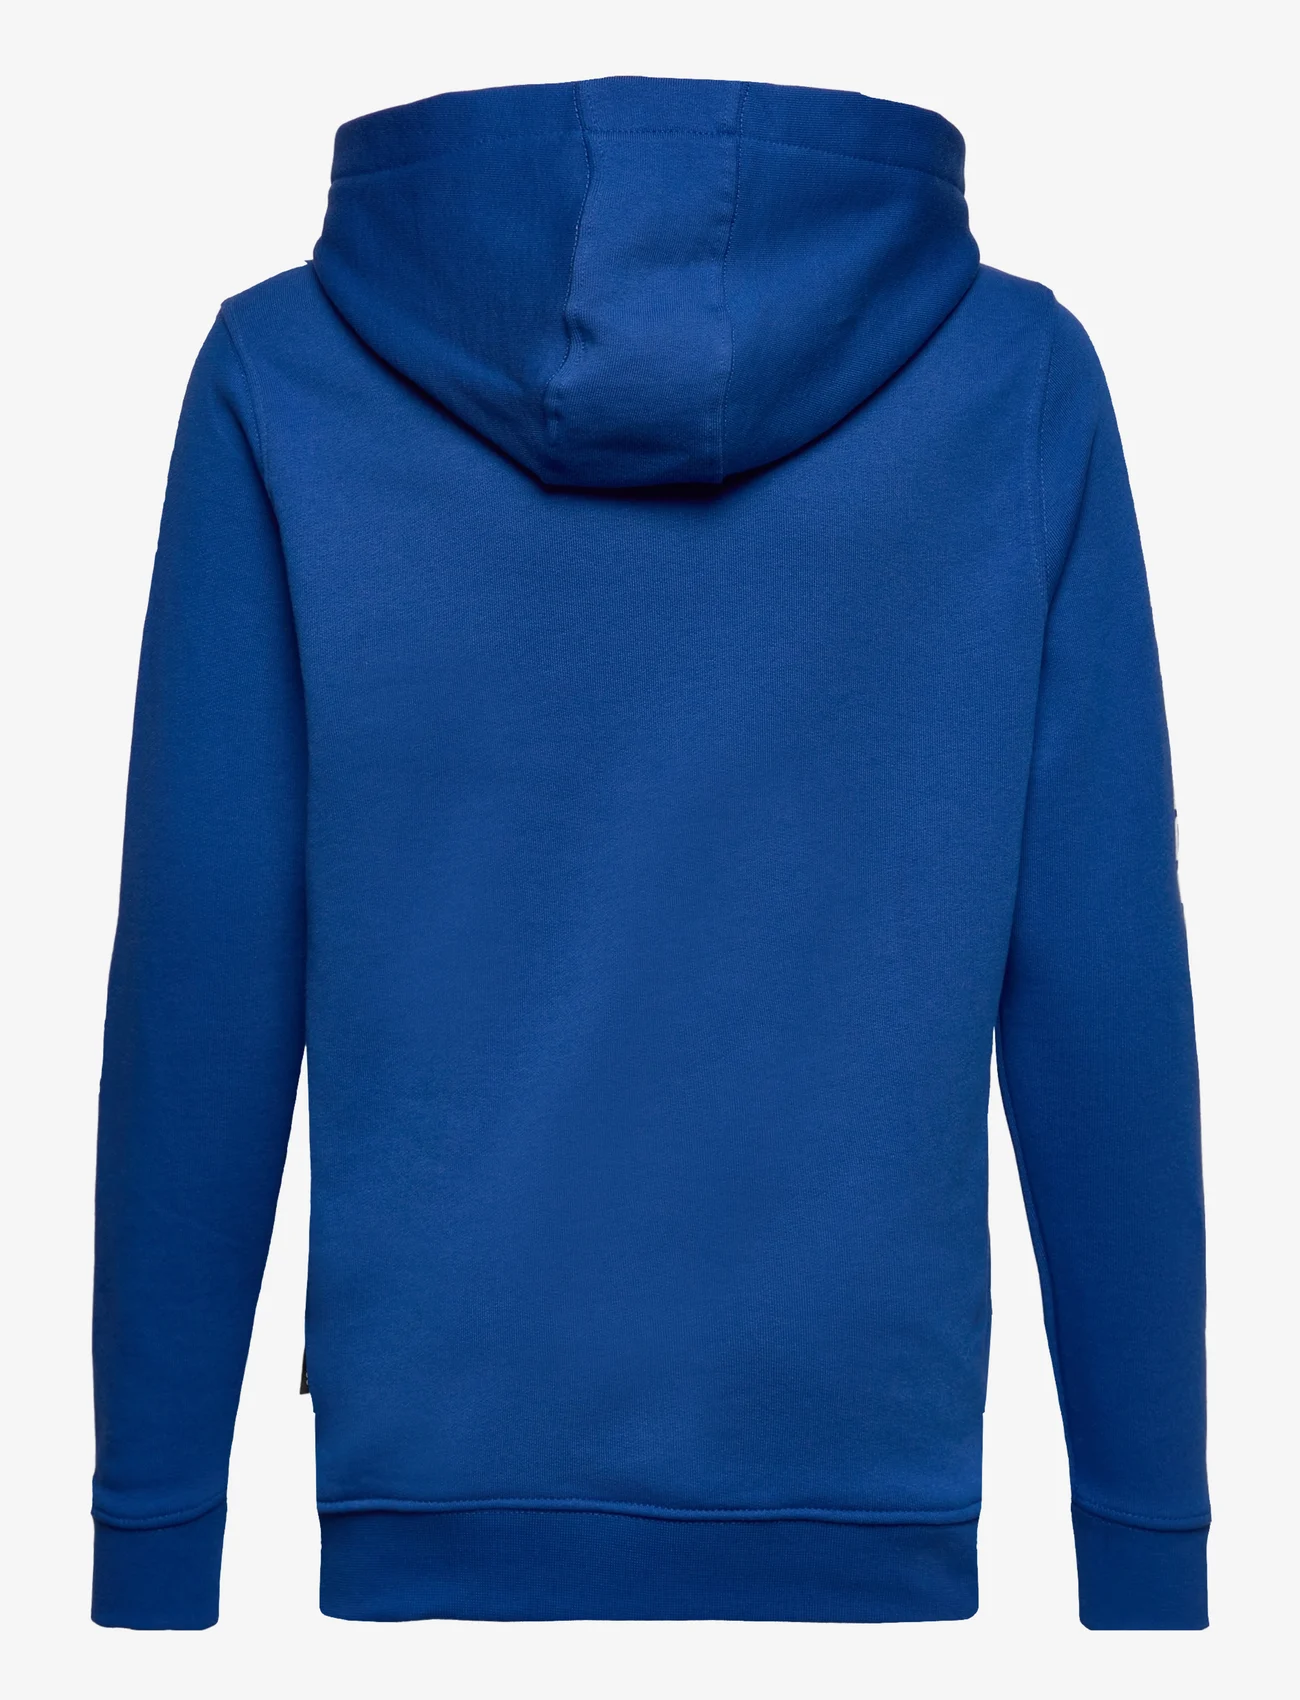 VANS - REFLECTIVE CHECKERBOARD FLAME PO - hoodies - true blue - 1